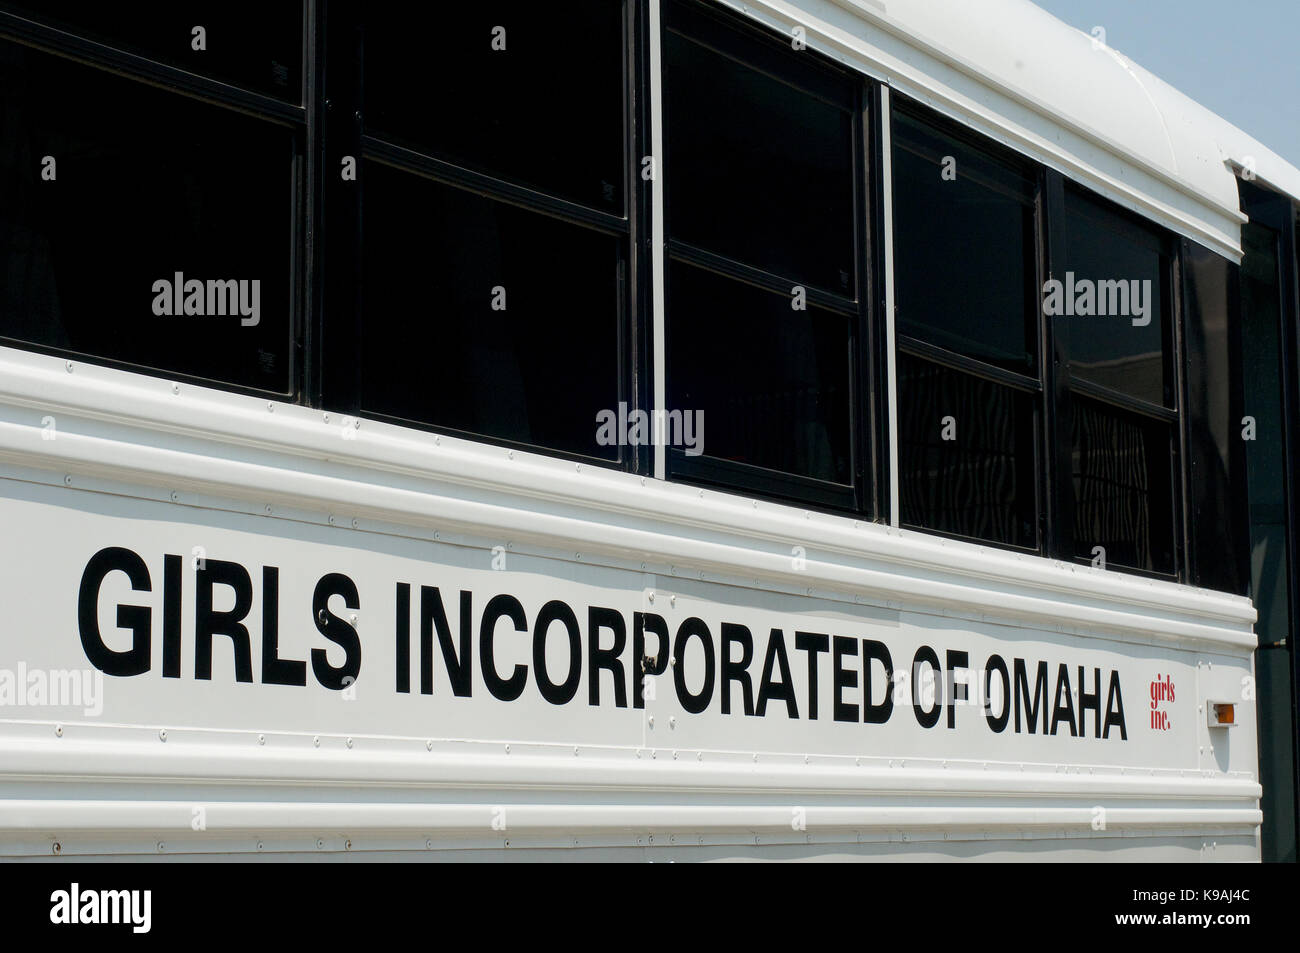 Detail of Girls Incorporated Bus at Omaha, Nebraska, USA Stock Photo